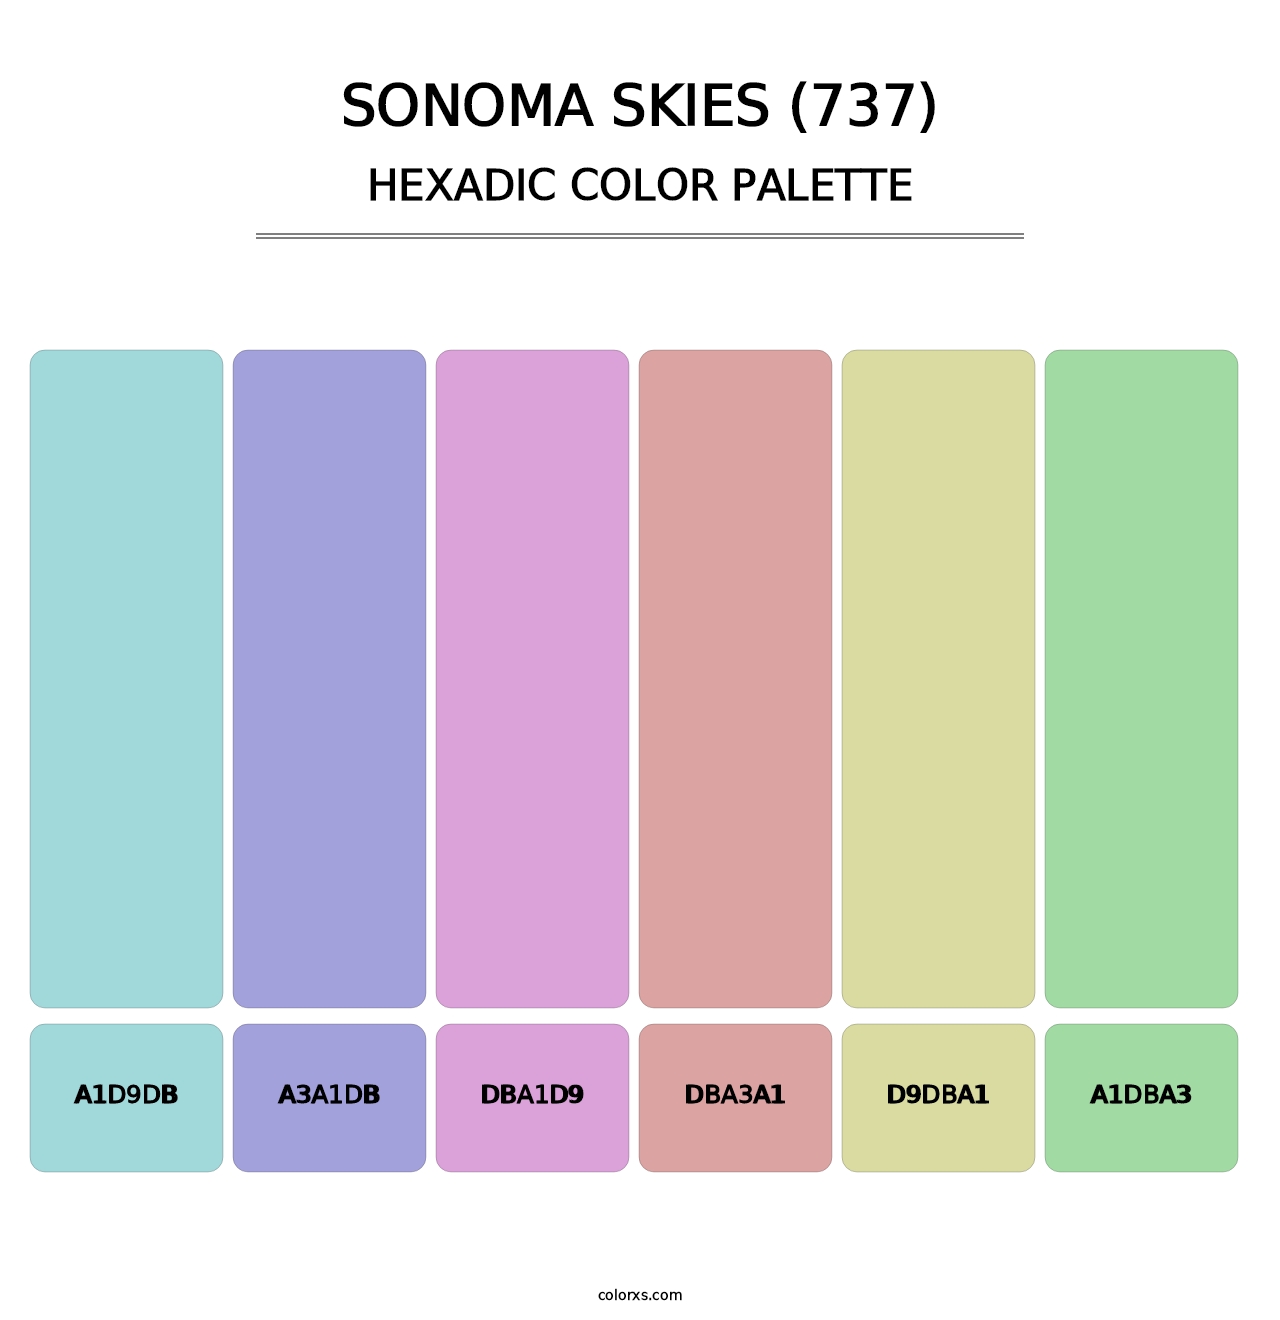 Sonoma Skies (737) - Hexadic Color Palette